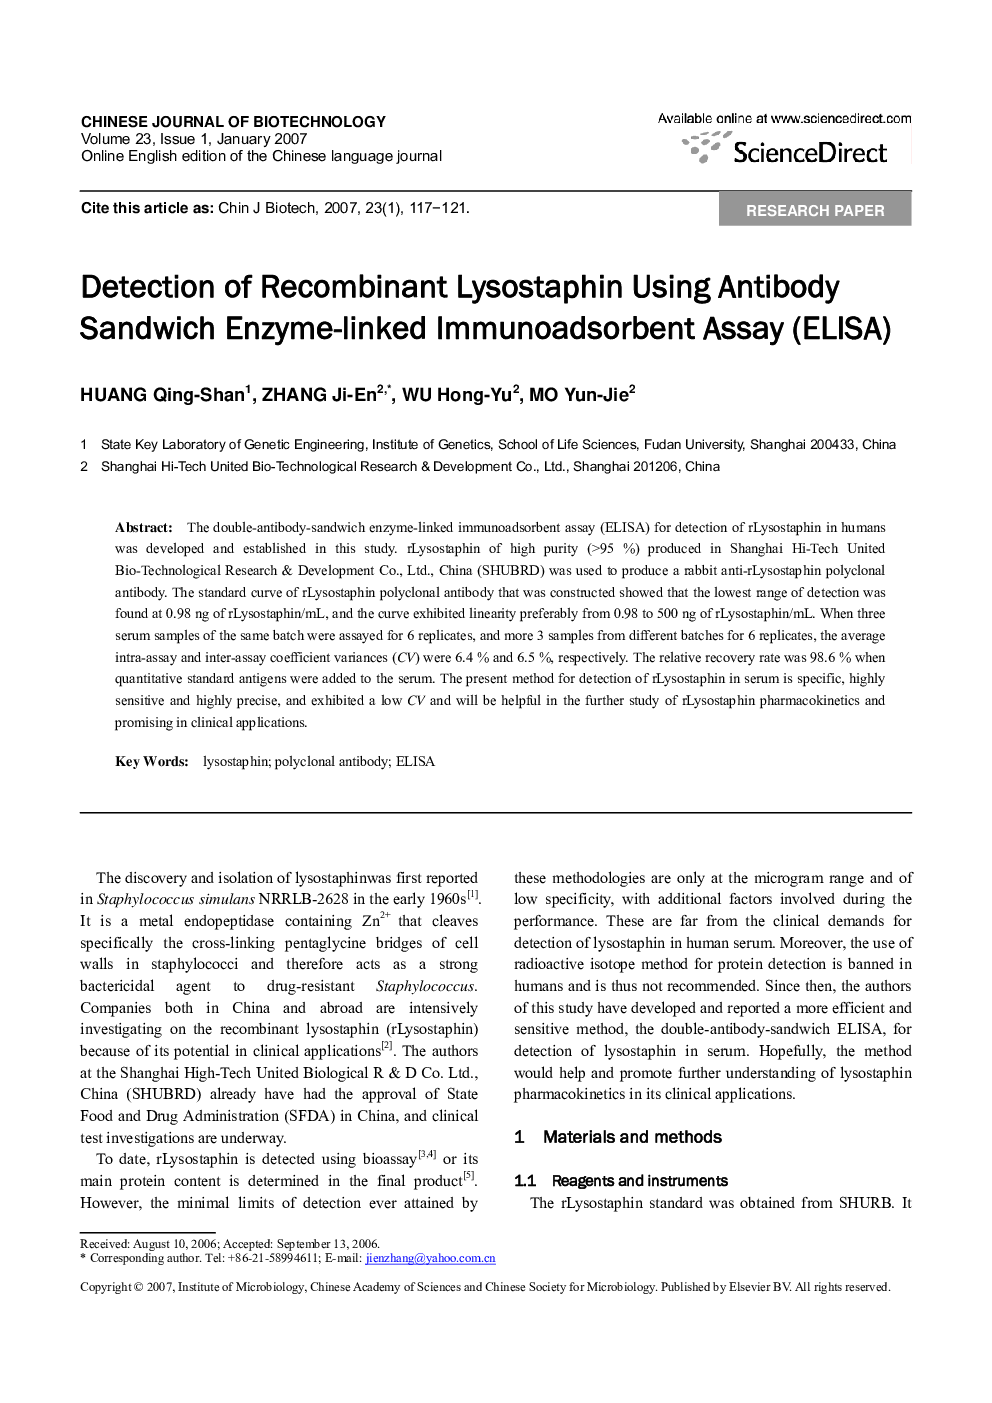 Detection of Recombinant Lysostaphin Using Antibody Sandwich Enzyme-linked Immunoadsorbent Assay (ELISA)